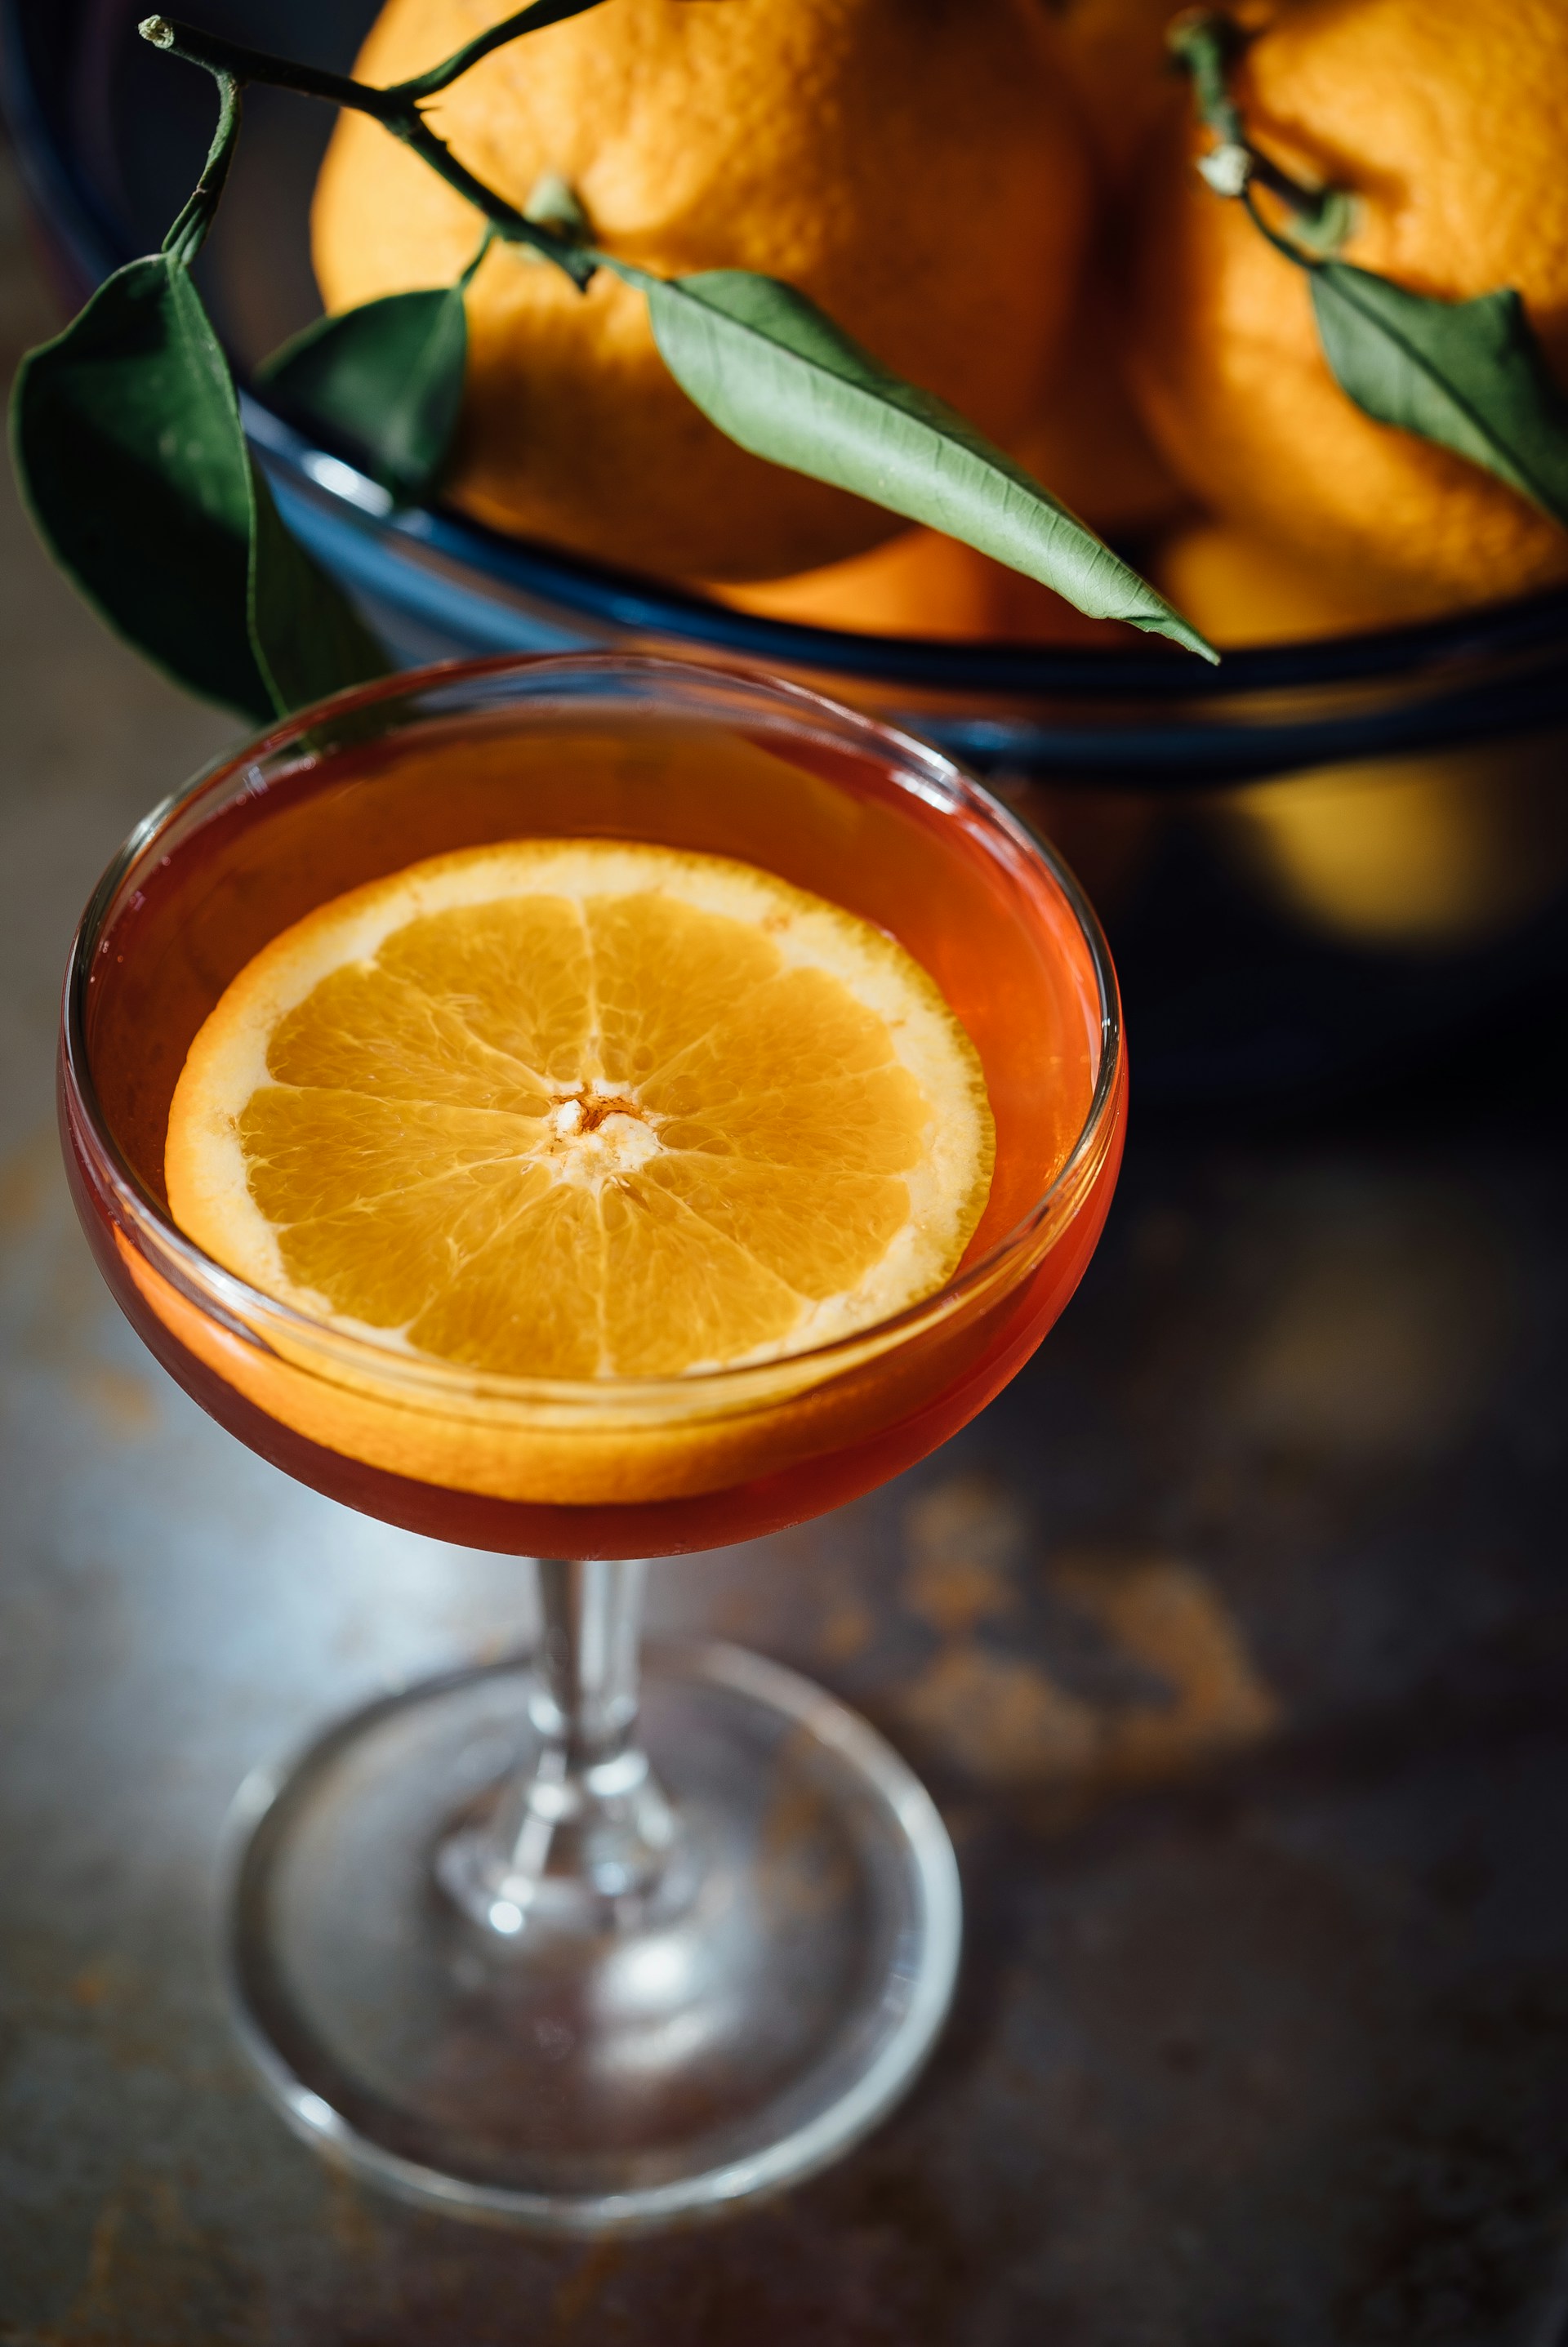 garibaldi cocktail